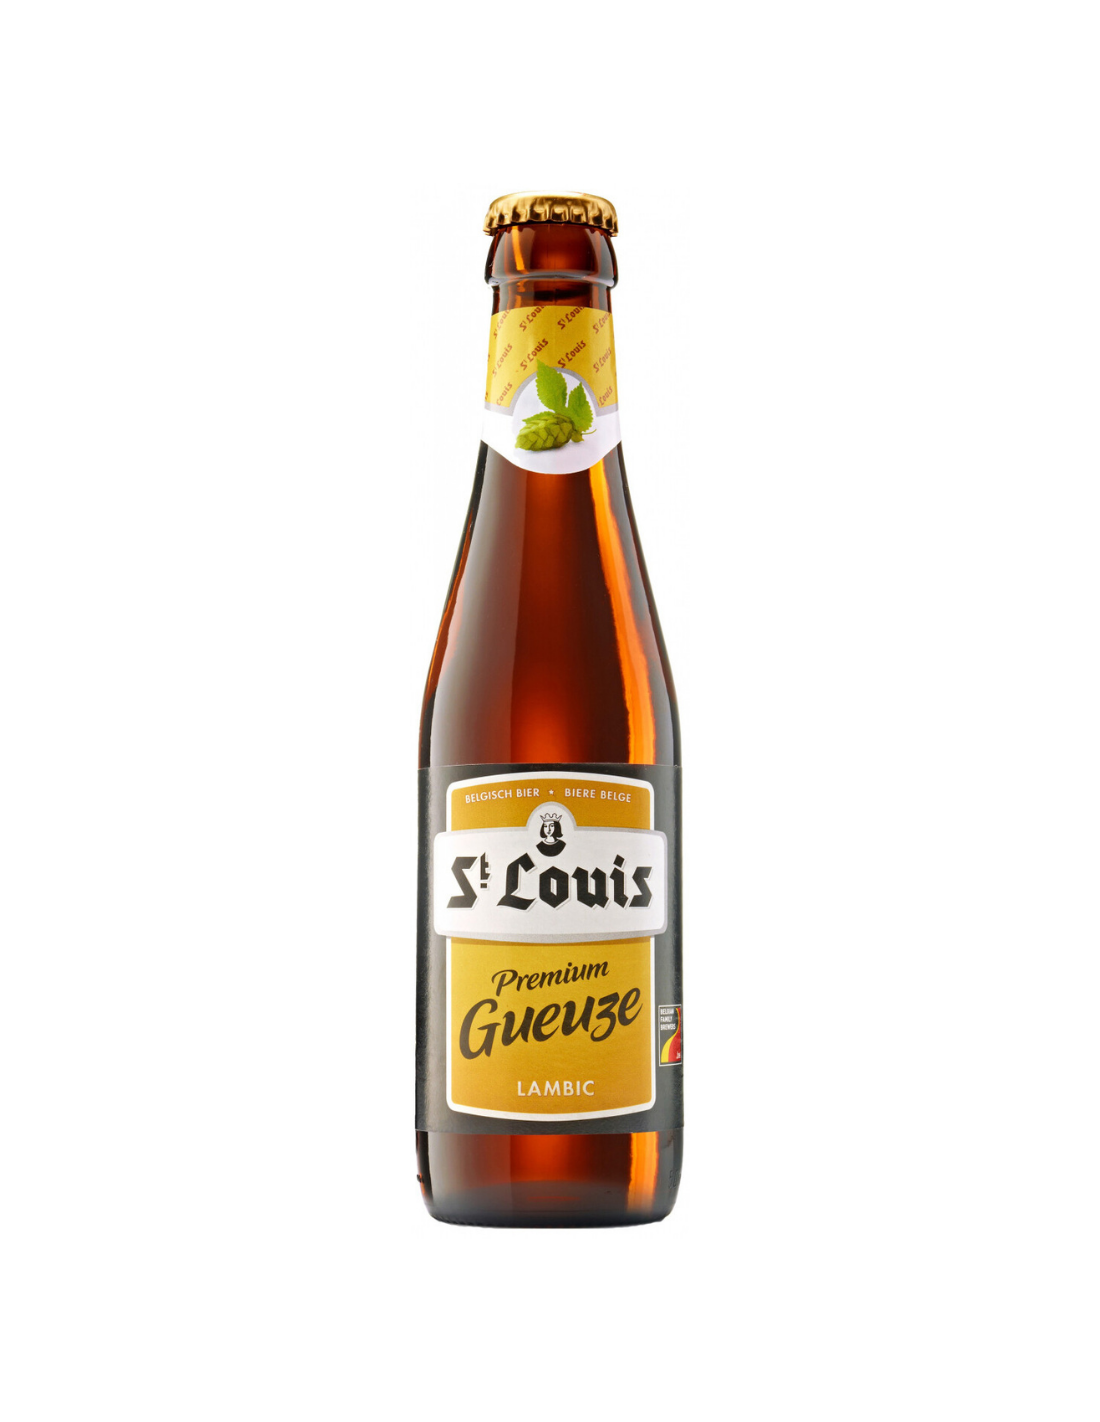 Bere blonda, filtrata St. Louis Premium Gueuze, 4.5% alc., 0.25L, sticla, Belgia alcooldiscount.ro